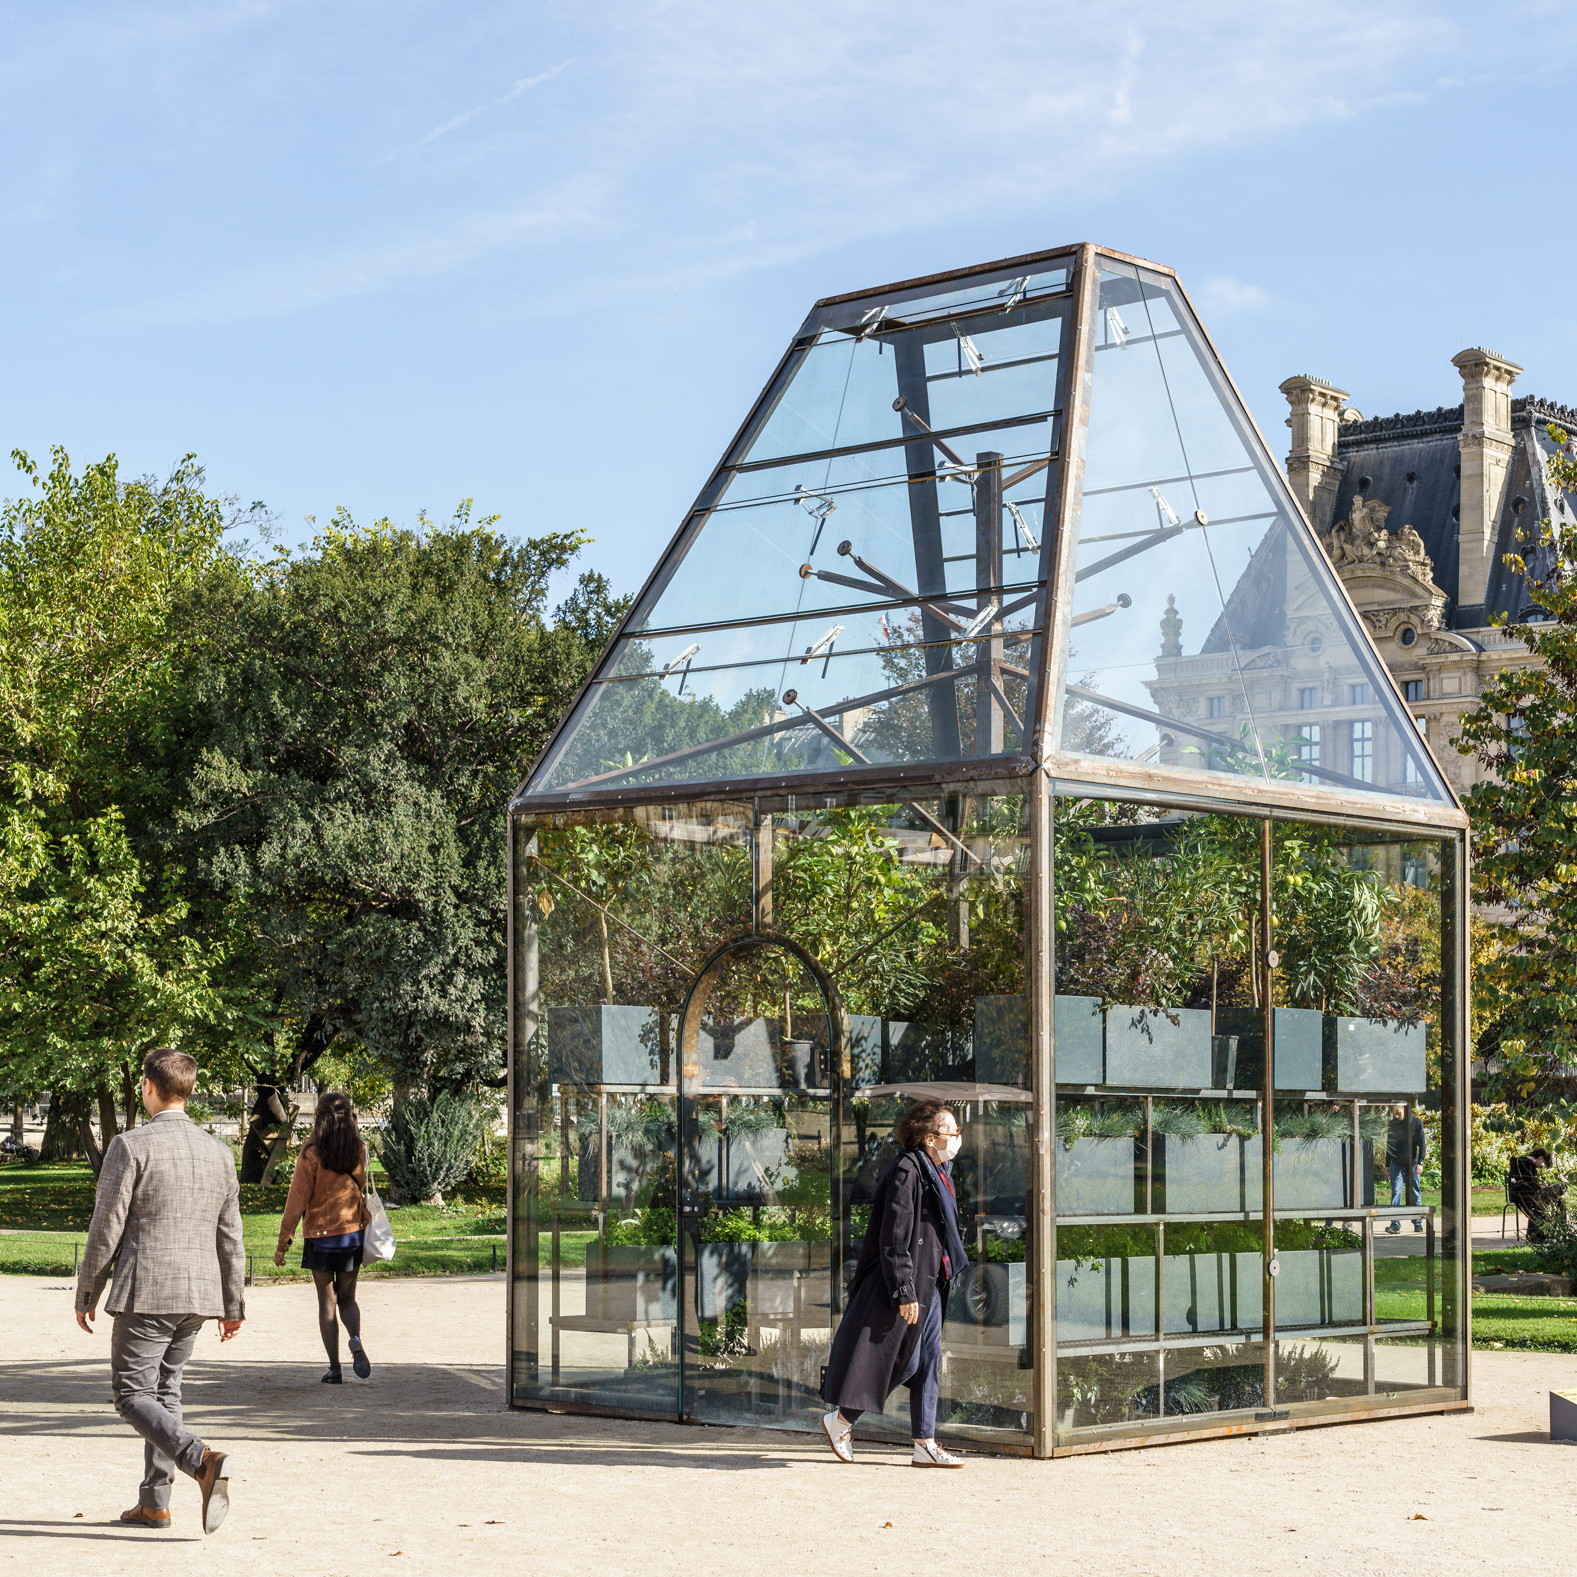 Studio Odile Decq's minimalist glass pavilion recalls traditional greenhouses